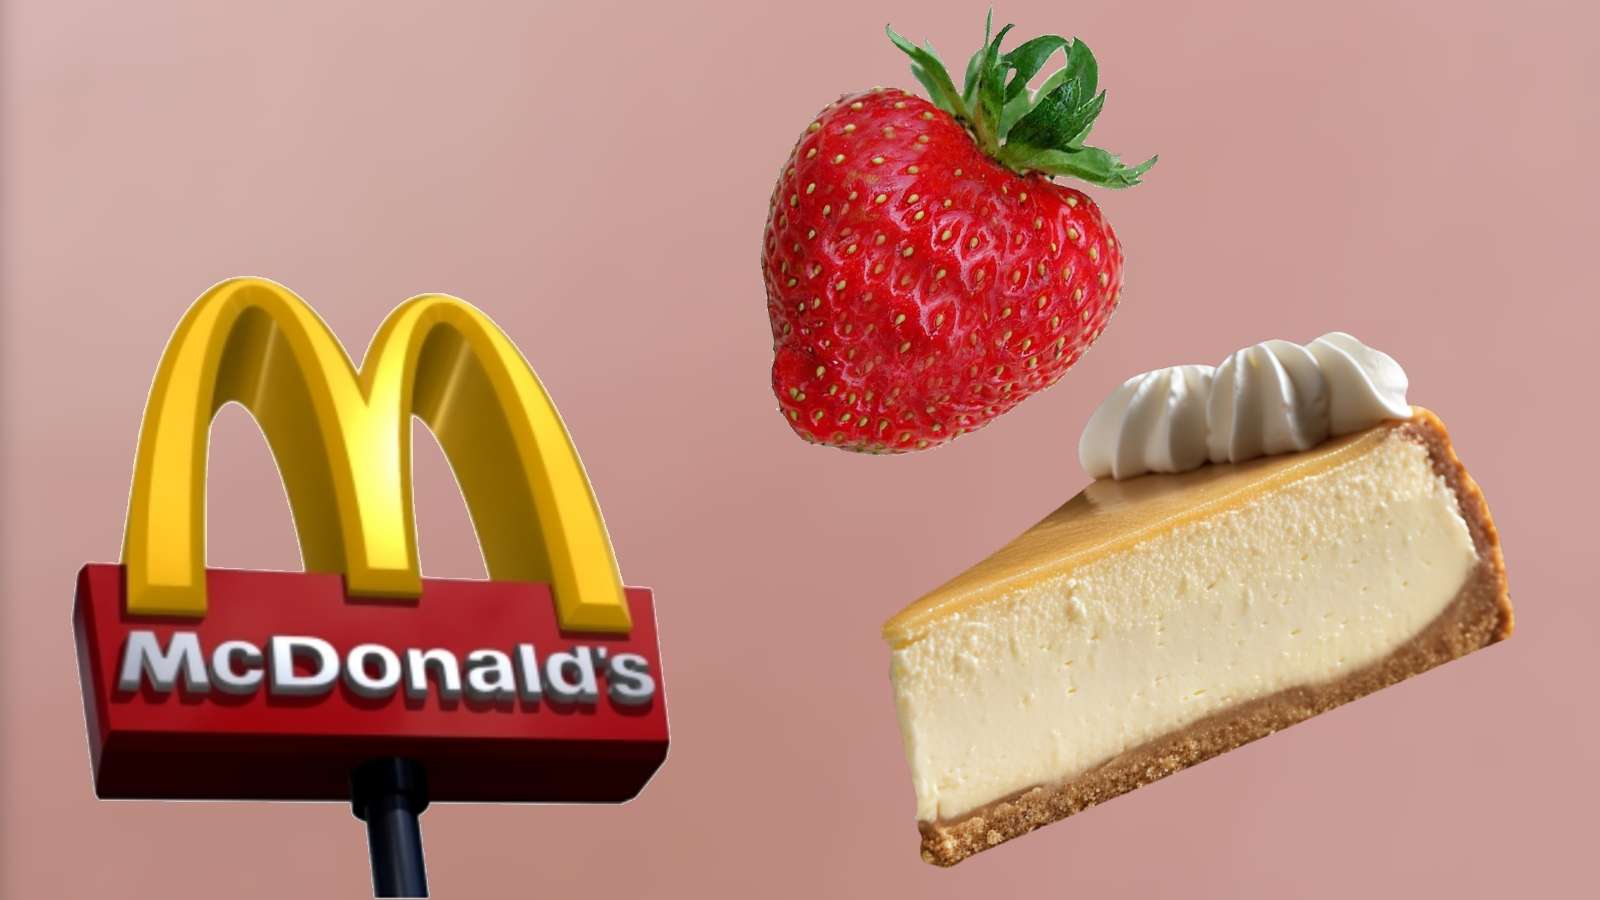 McDonald's new McFlurry flavour